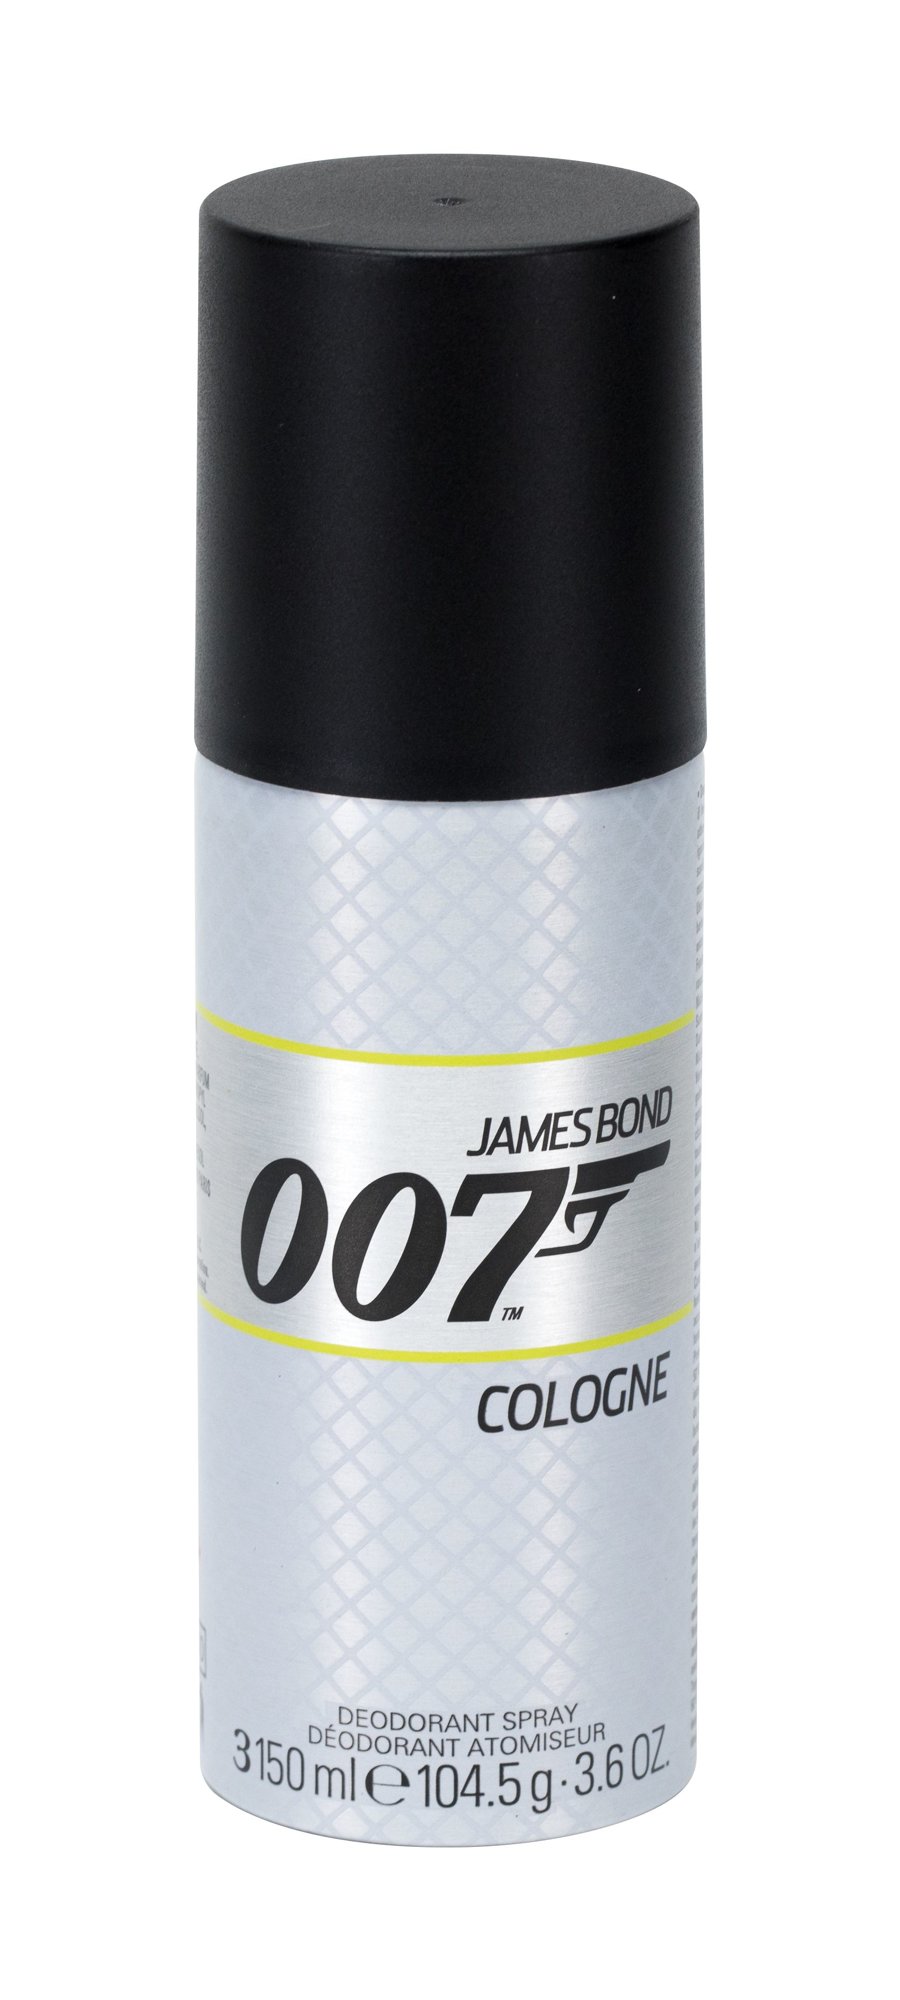 James Bond 007 James Bond 007 Cologne 150ml dezodorantas